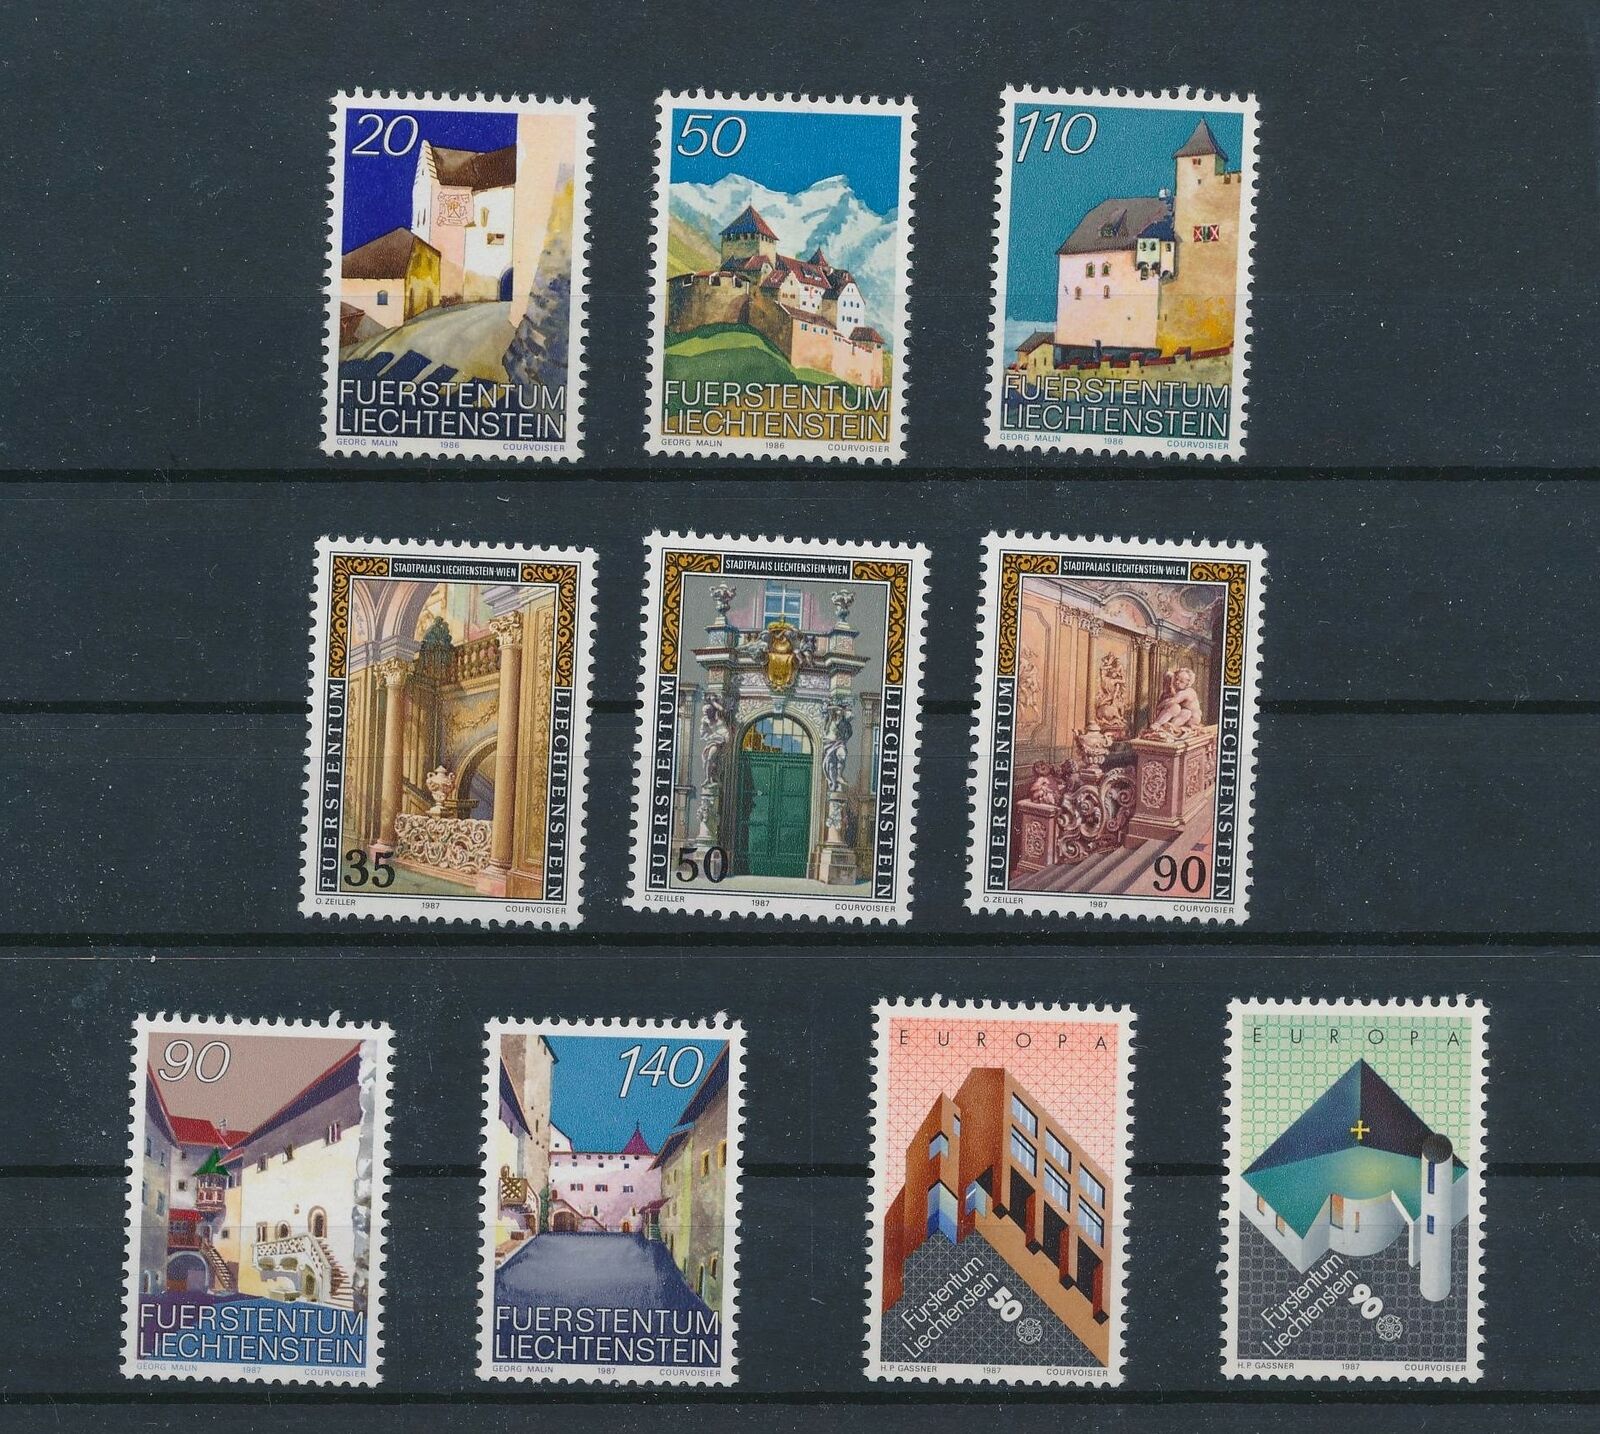 LO42585 Liechtenstein mixed thematics nice lot of good stamps MNH